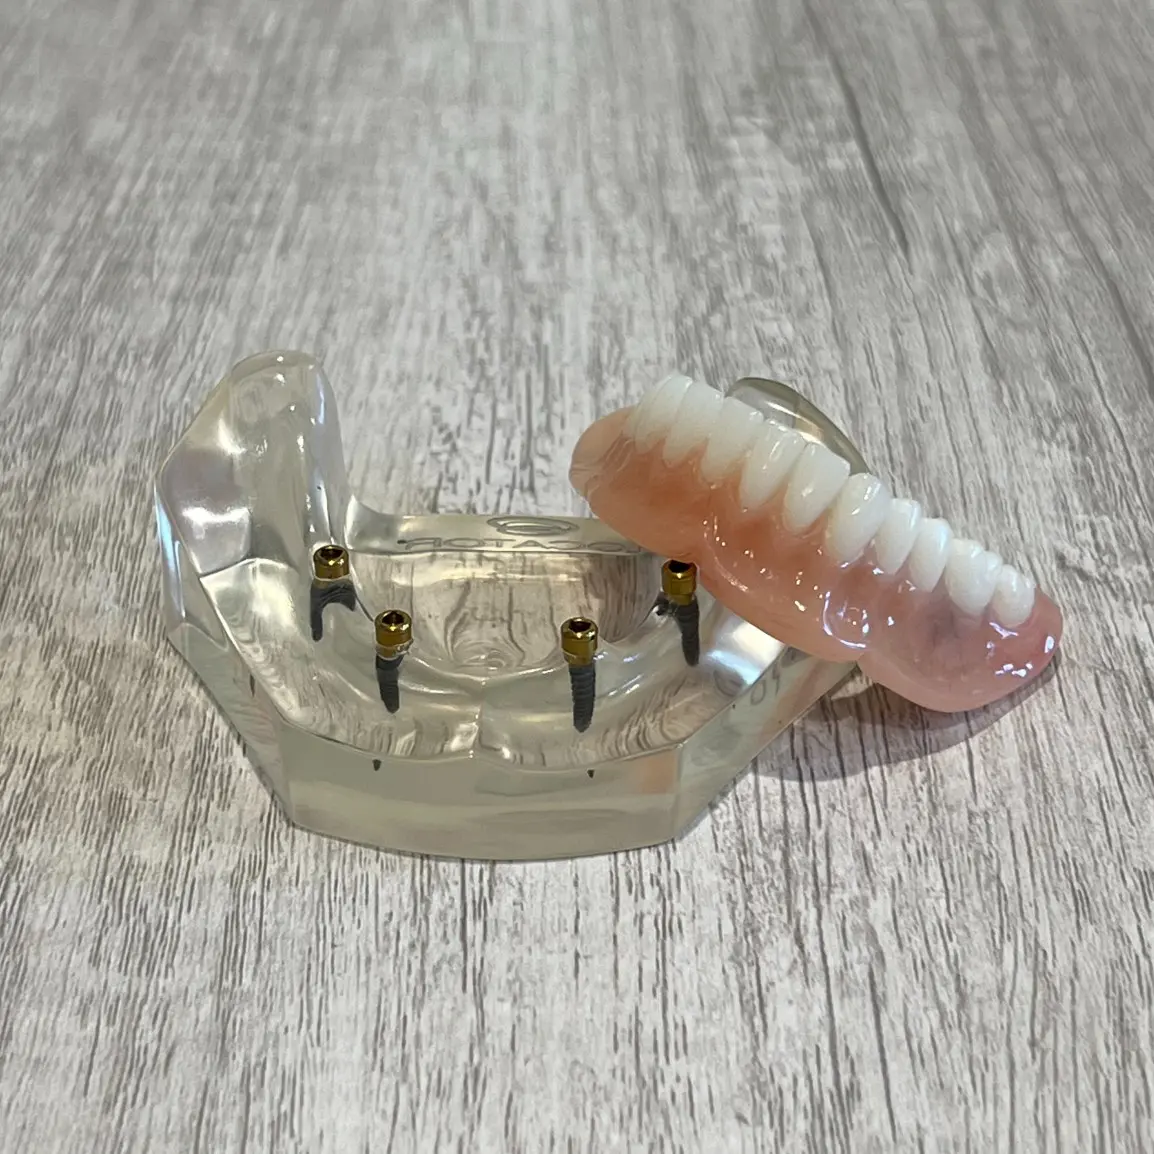 dental implants glendale az | snap in implant dentures